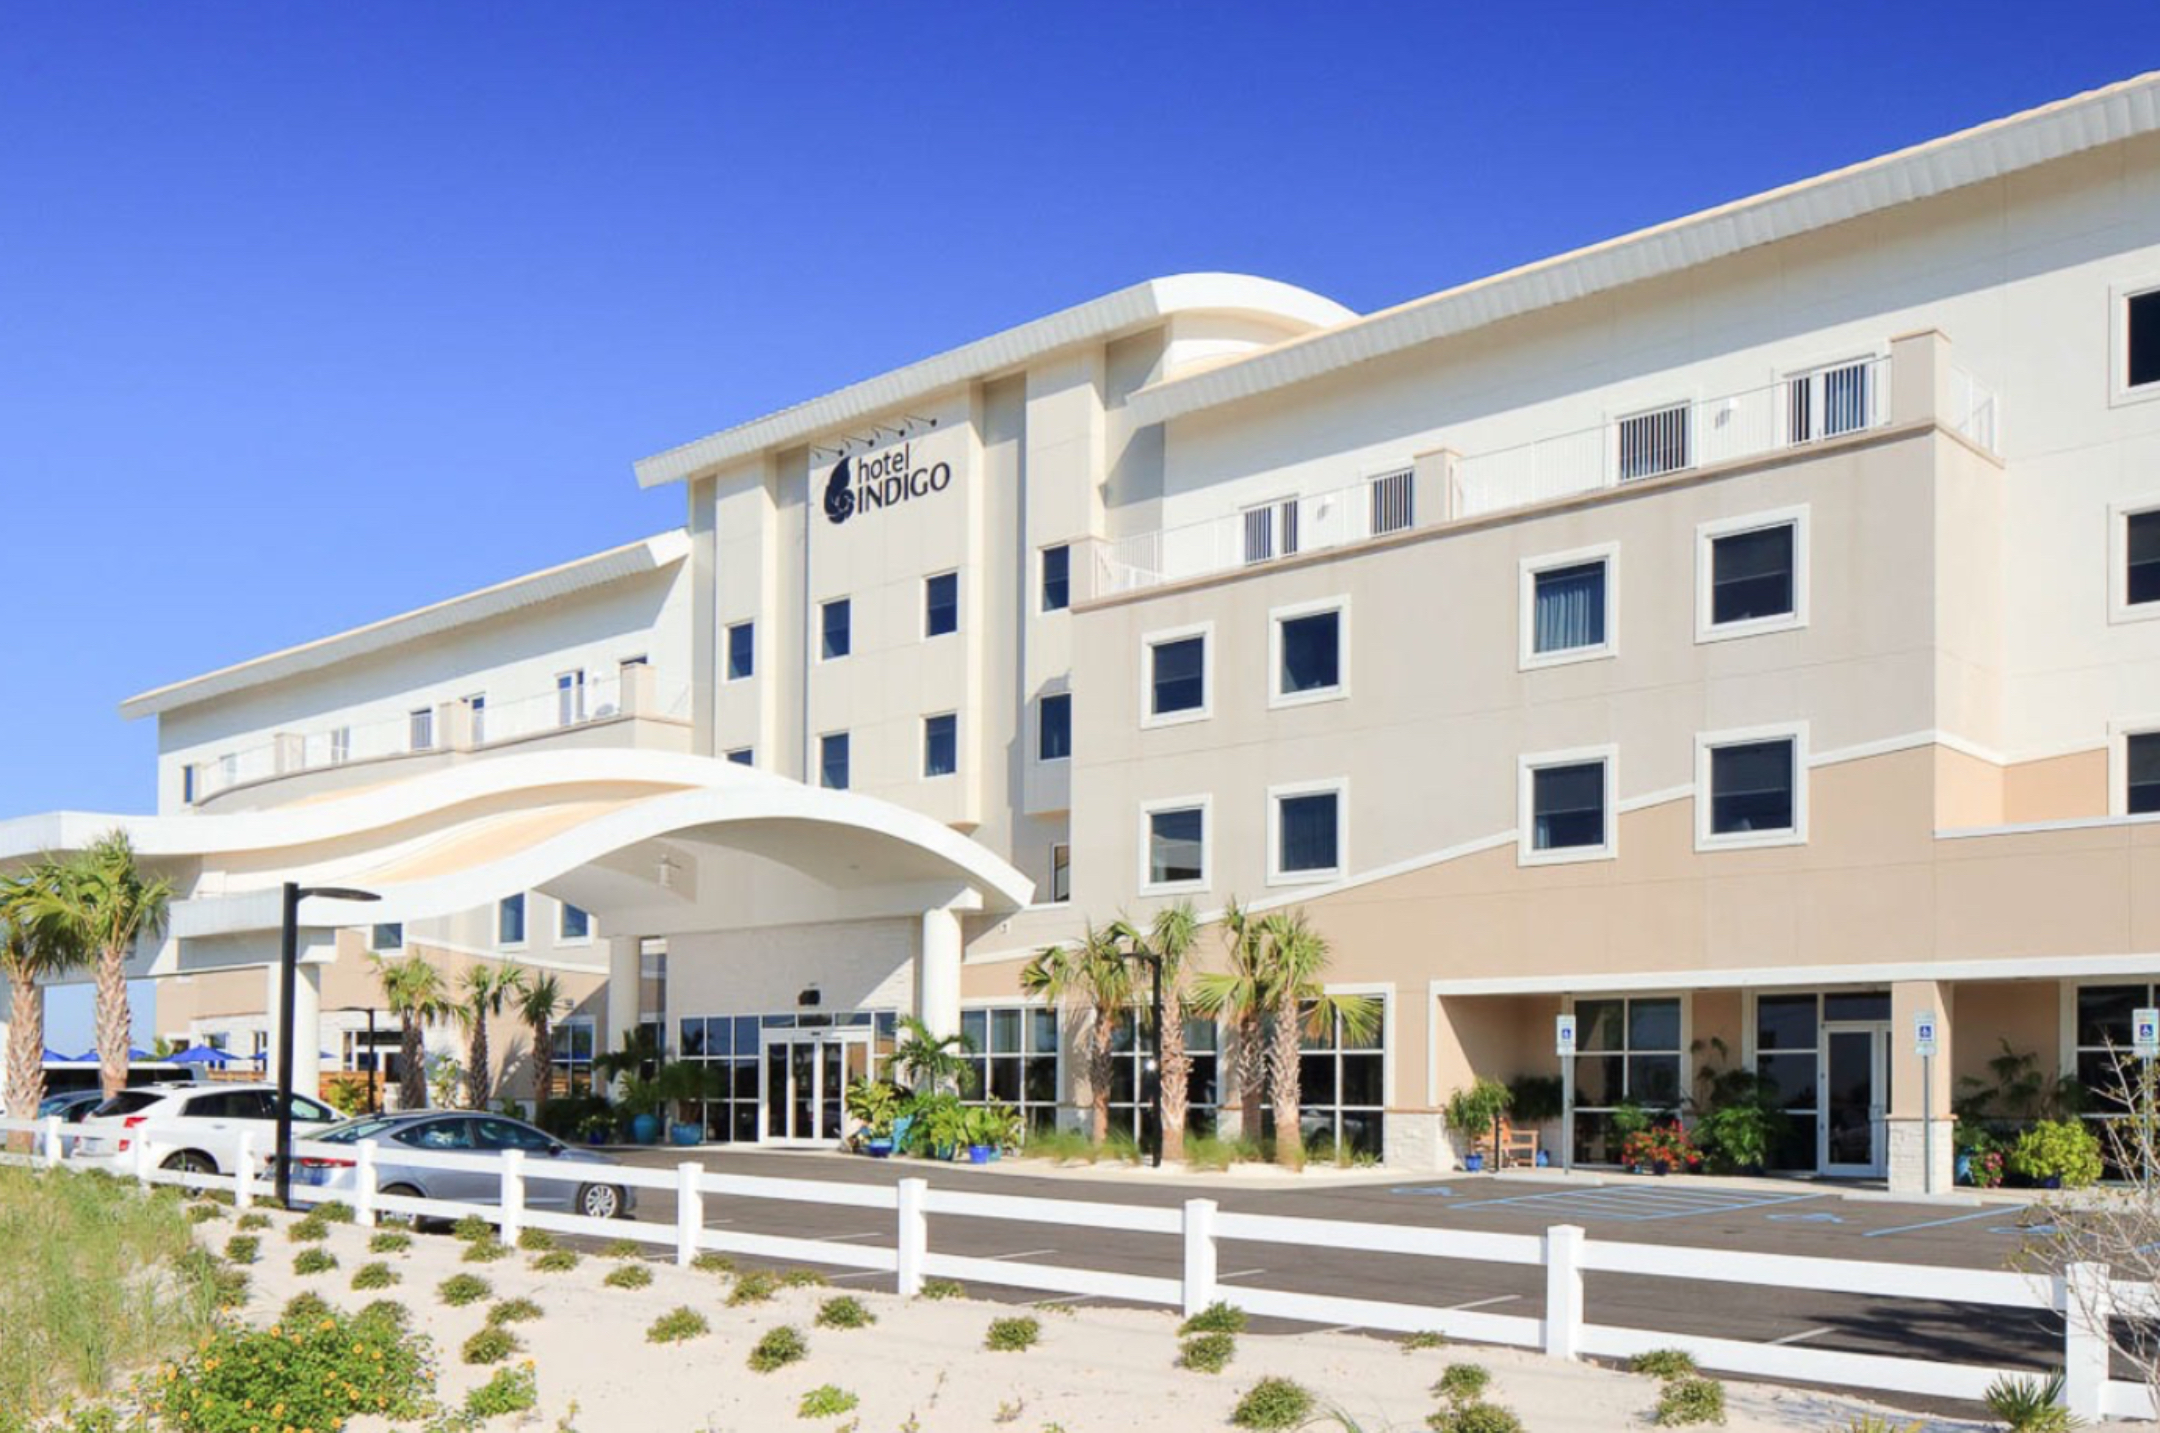 Hotel Indigo Orange Beach Gulf Shores- Alabama1